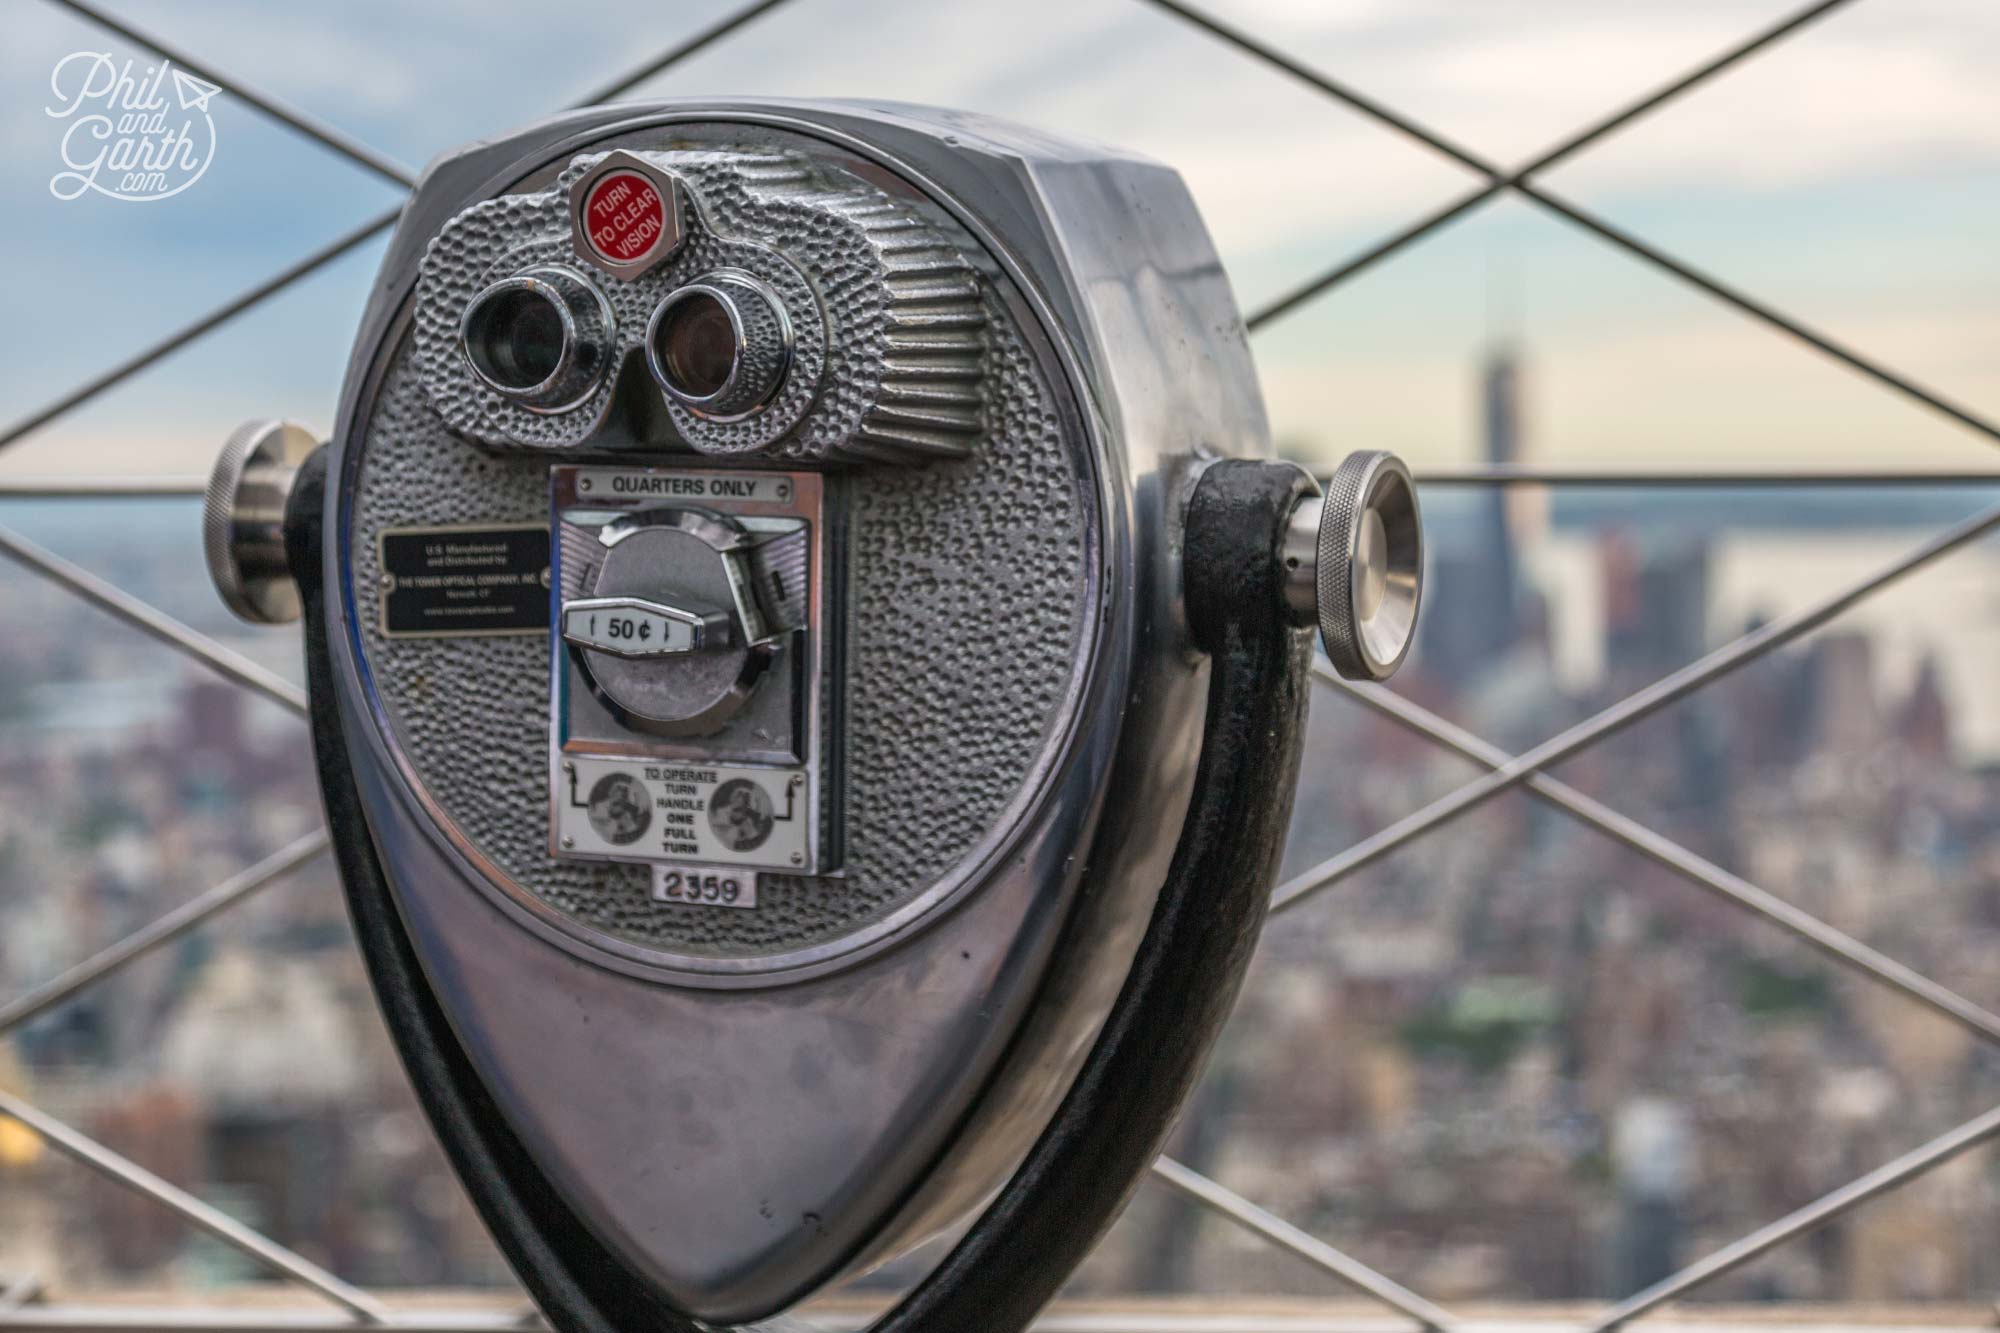 Observation deck binoculars Empire State Building New York City